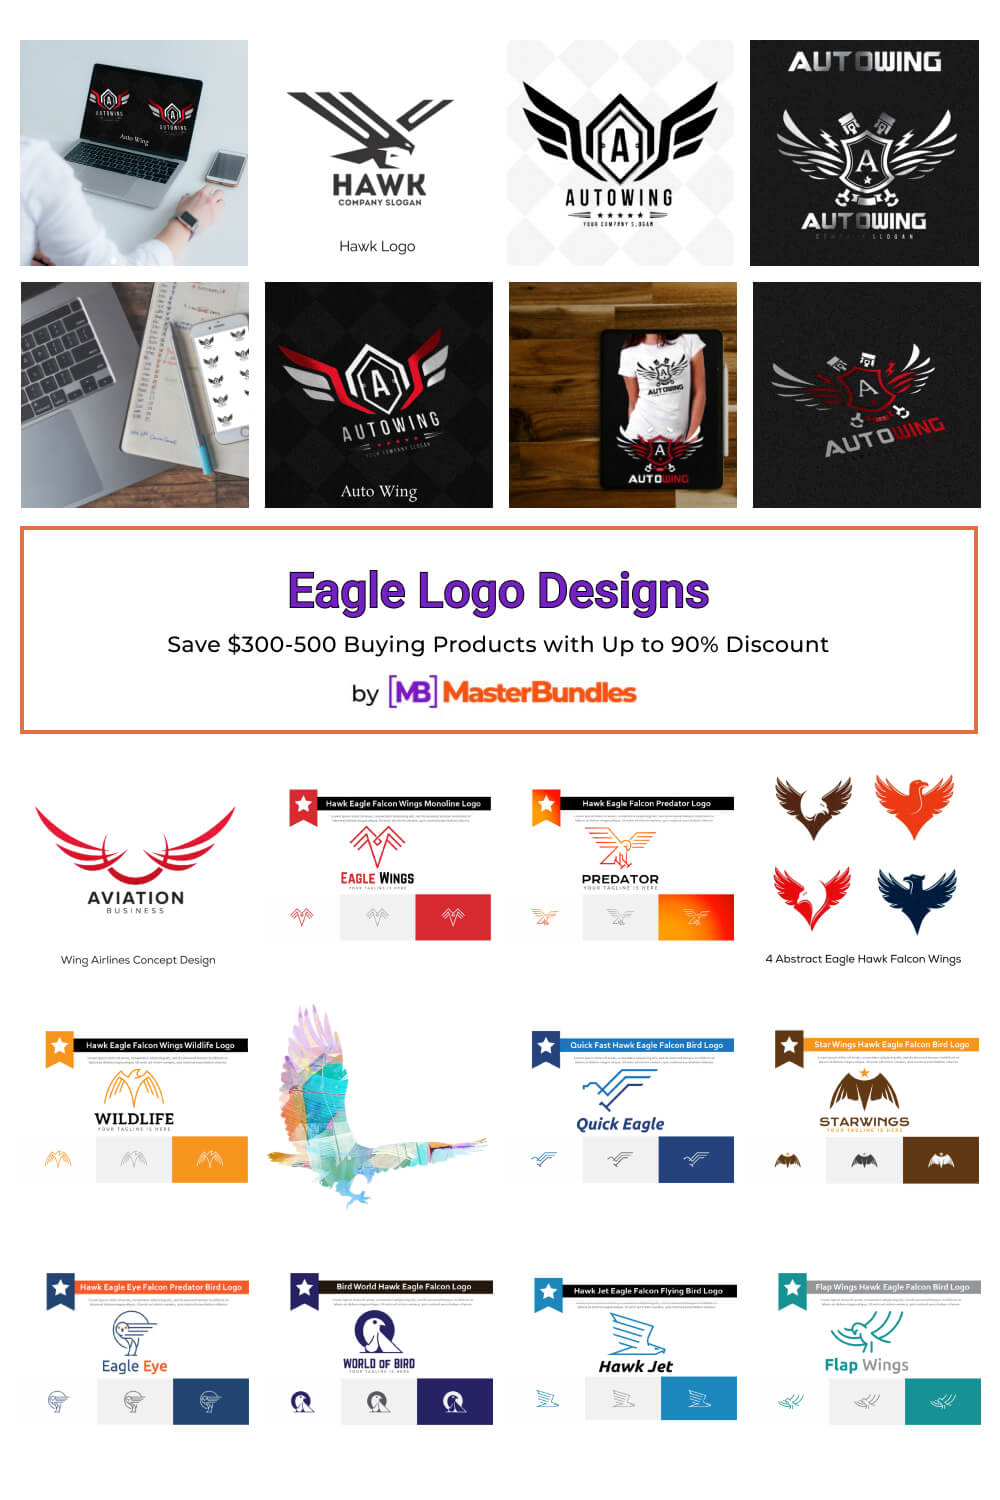 eagle logo designs pinterest image.